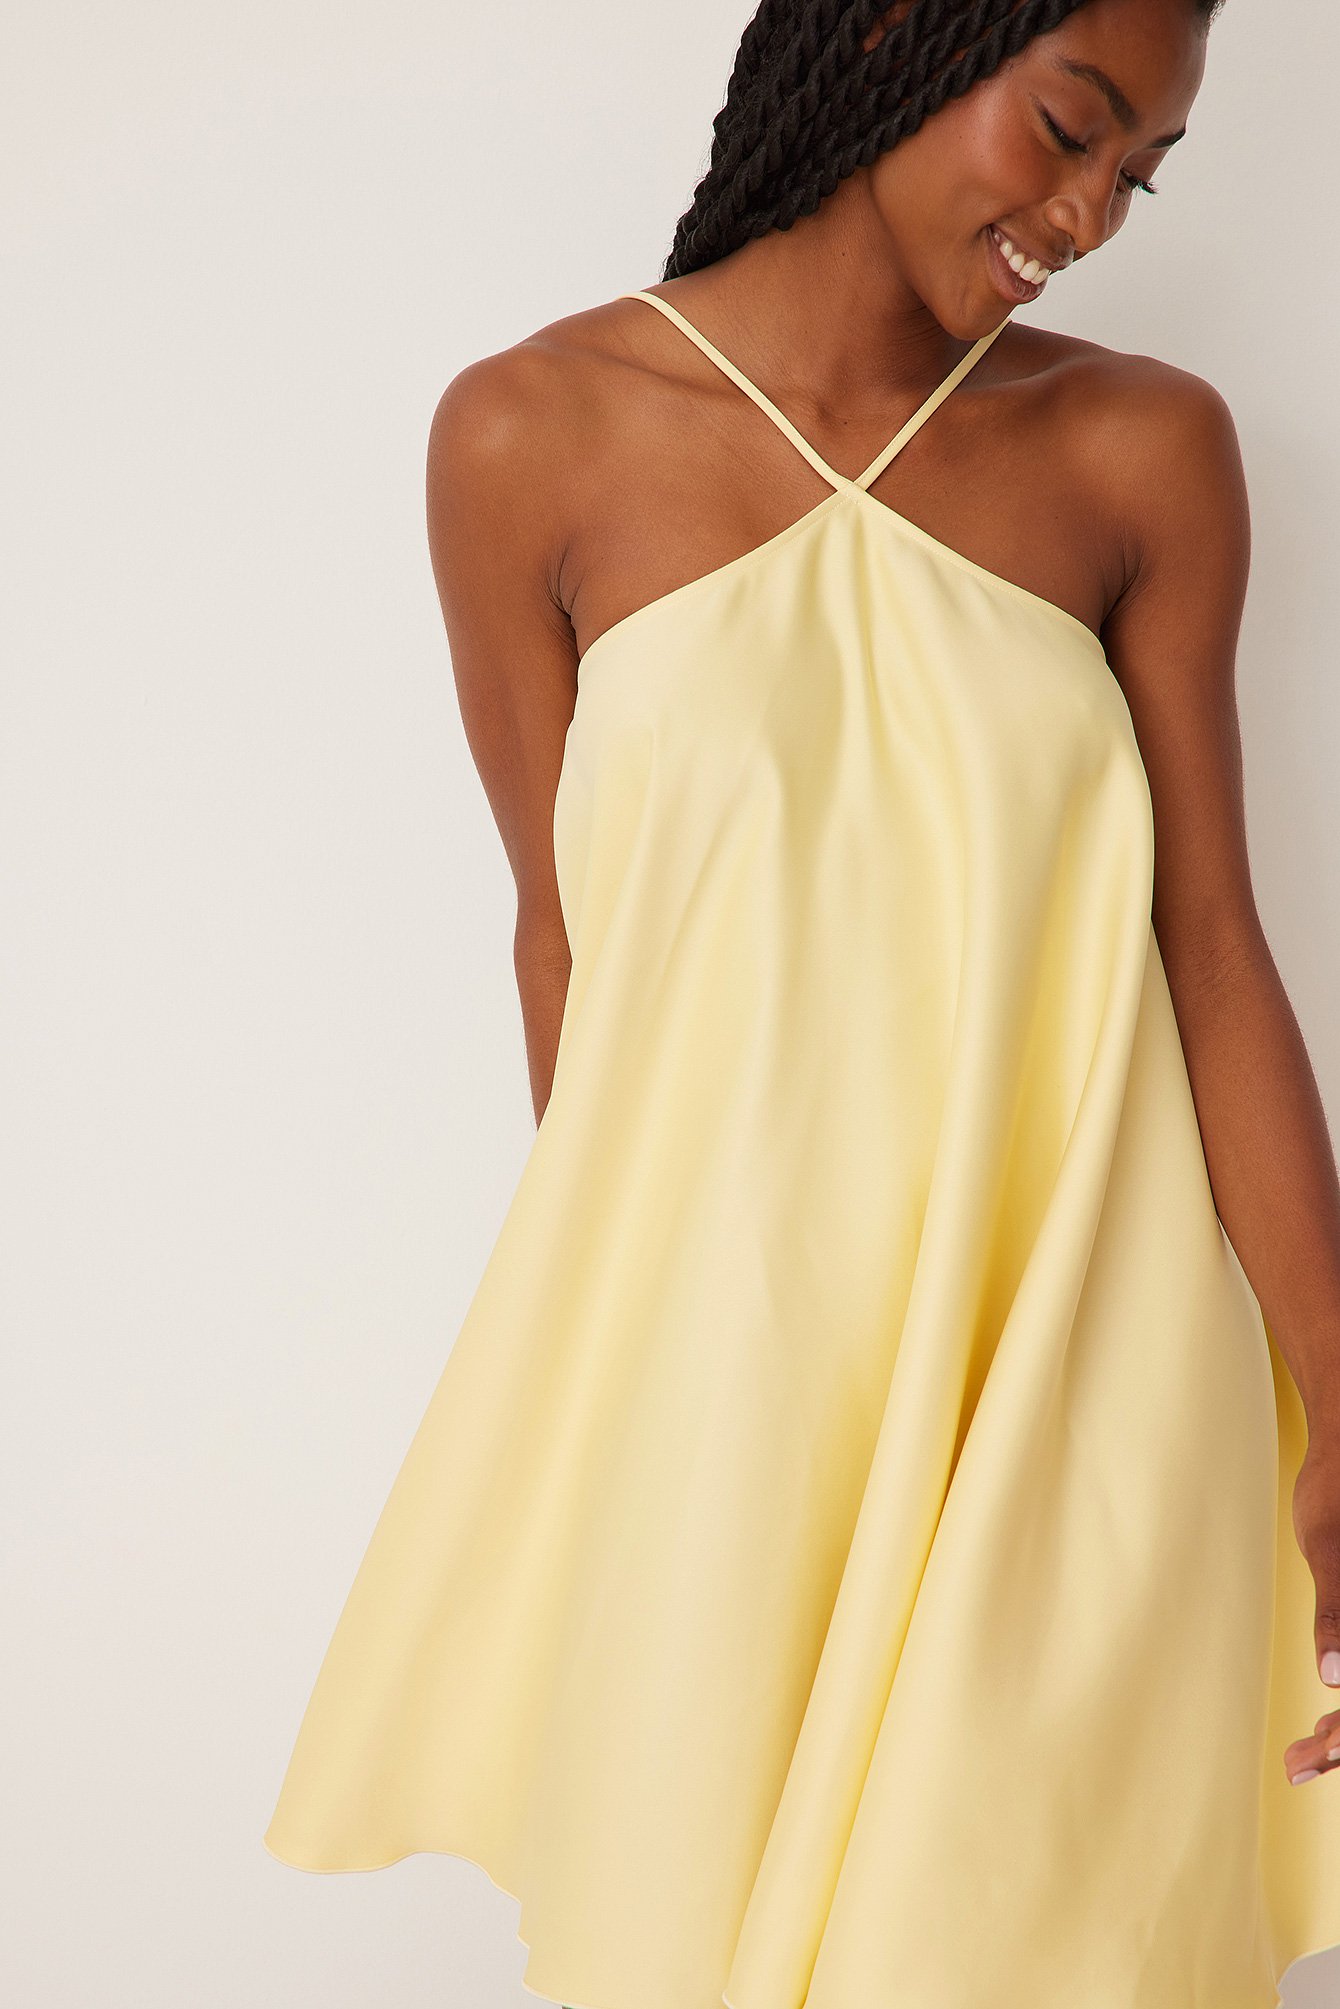 Buy Yellow A-line Printed Summer Dress Online - Aurelia